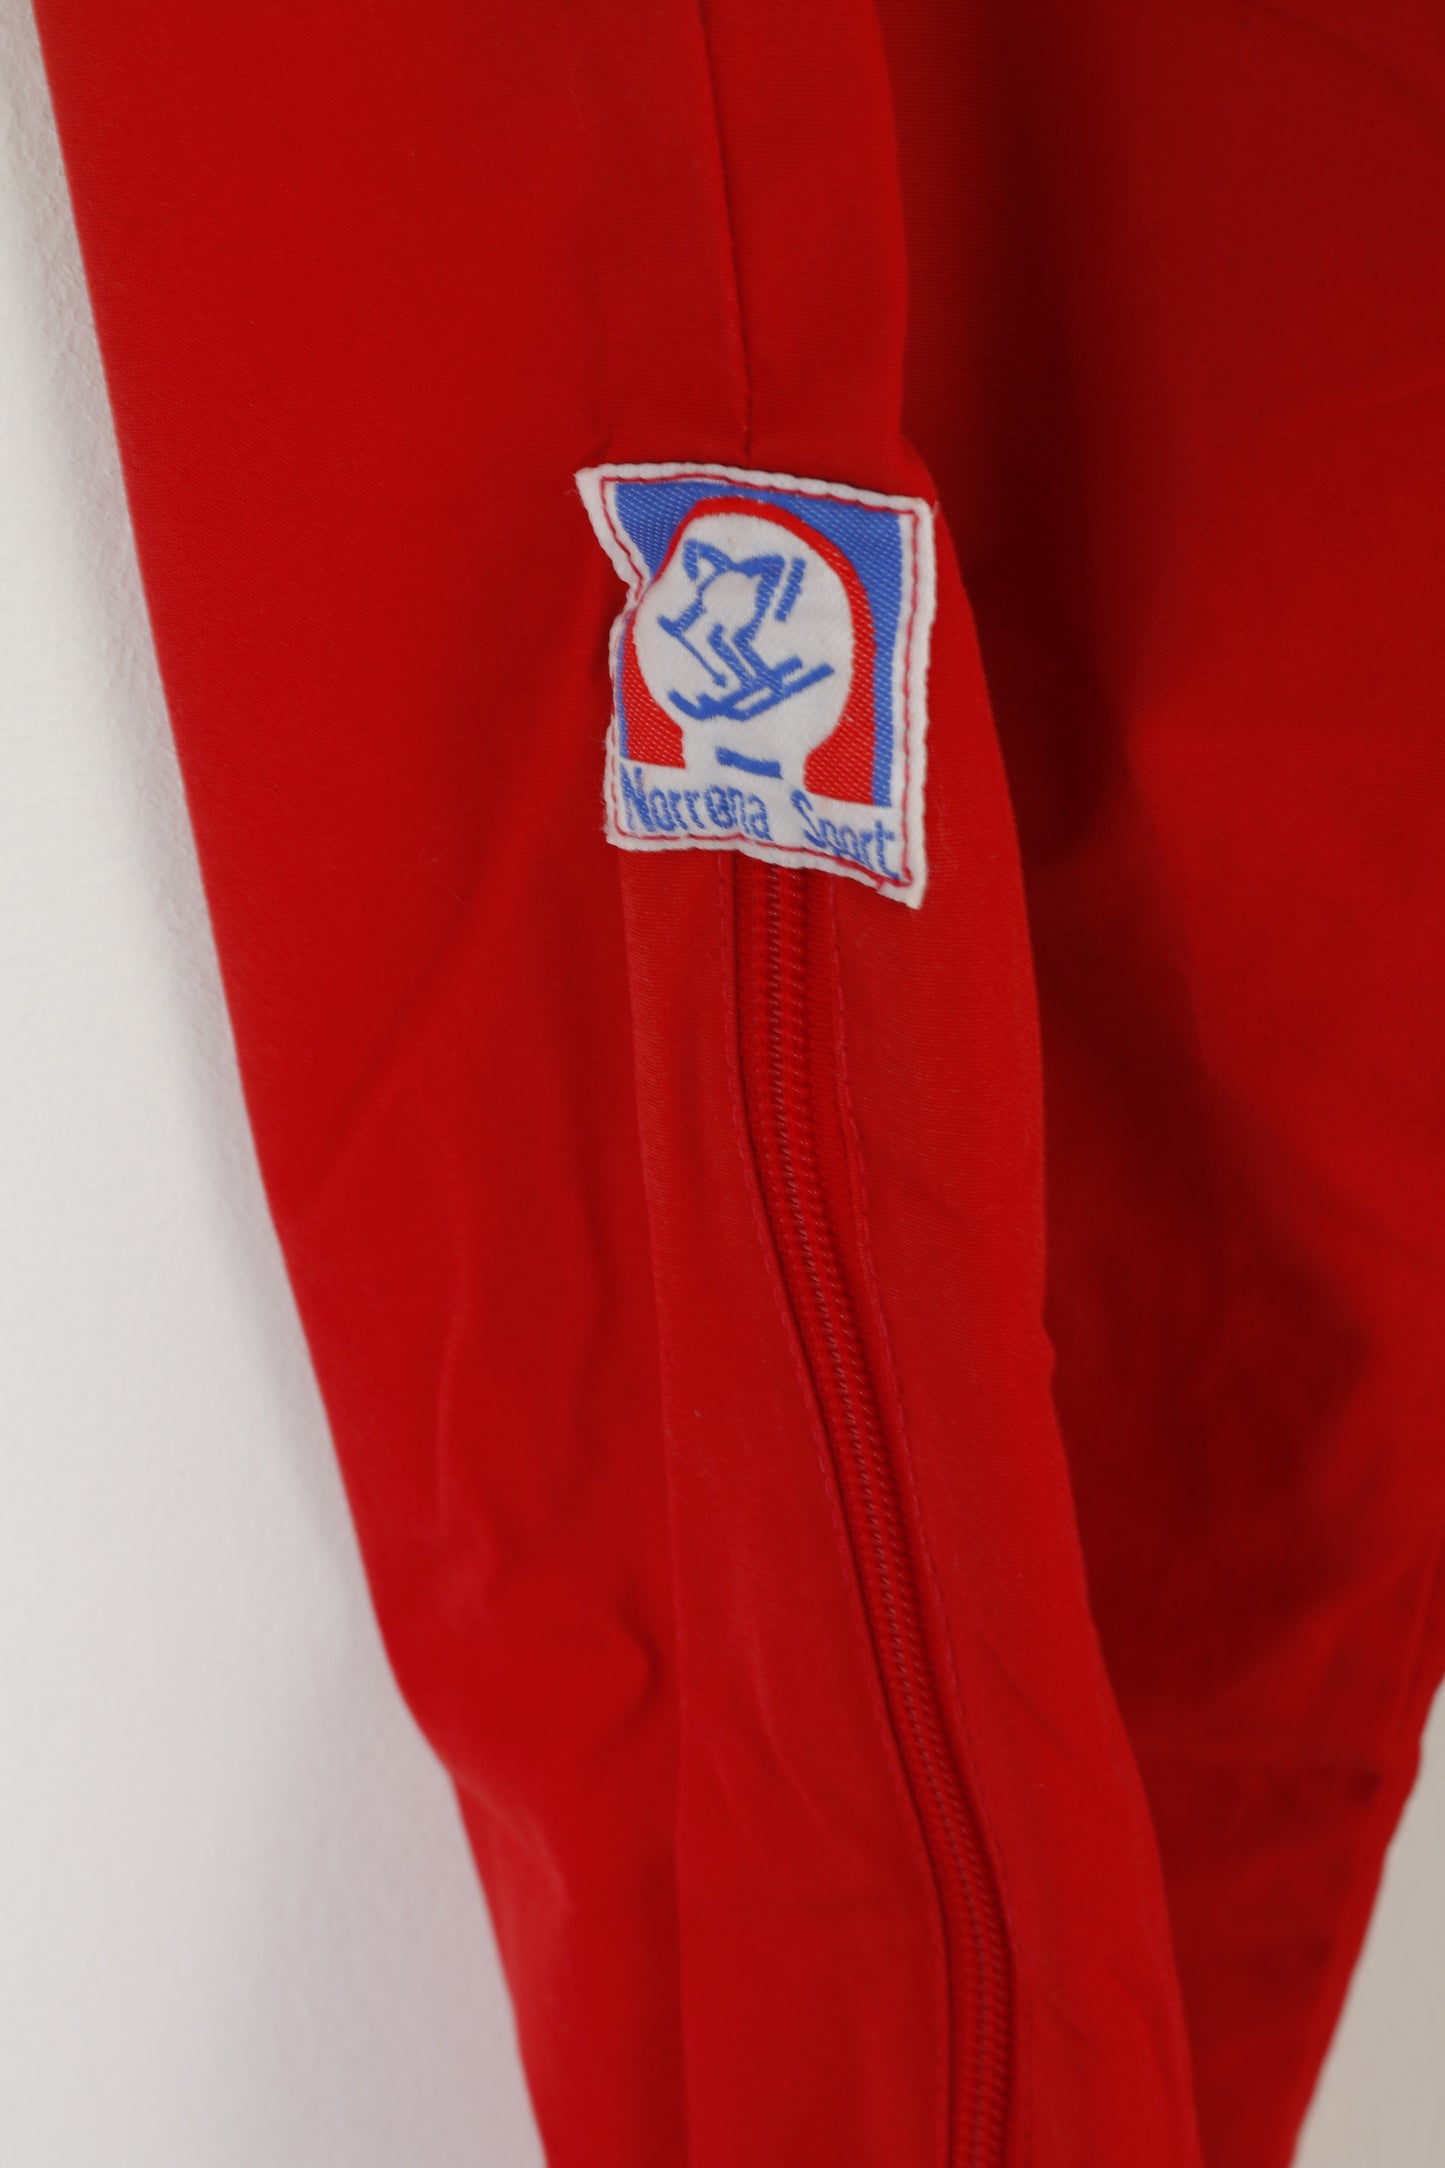 Norrona Sport Homme S 44/46 Pantalon Rouge Vintage Outdoor Sportswear Norvège Pantalon